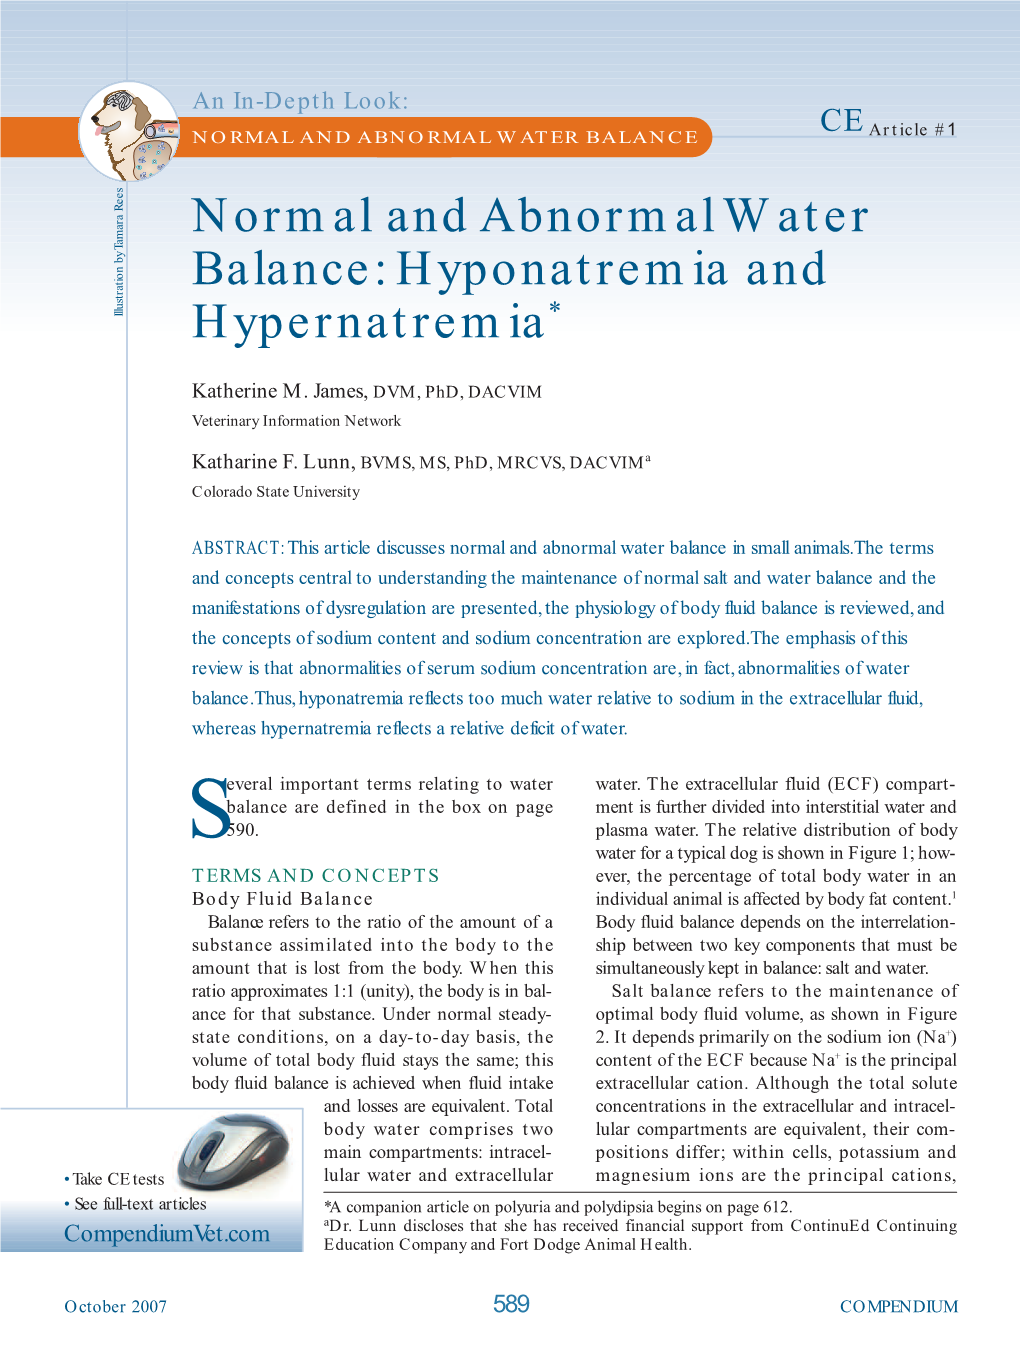 Hyponatremia and Hypernatremia